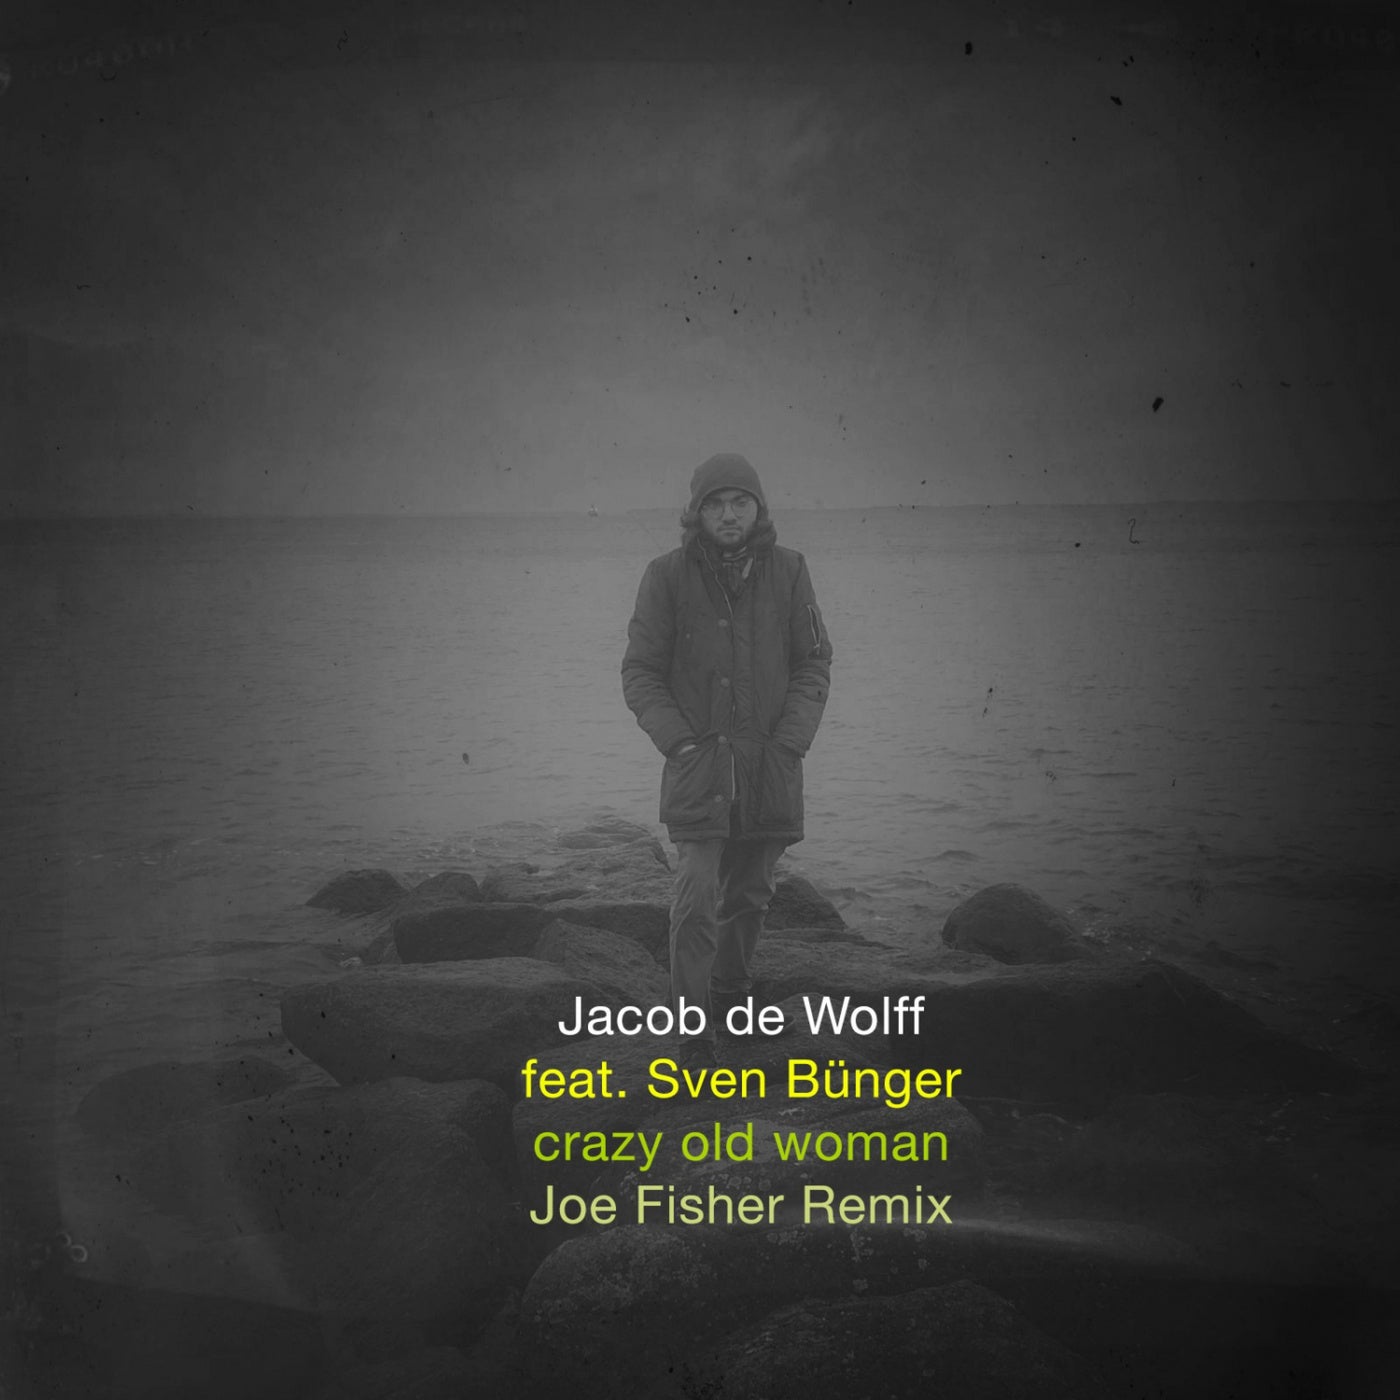 Jacob de Wolff, Sven Bunger - Crazy Old Woman (Joe Fisher Remix) [RLS00164808]